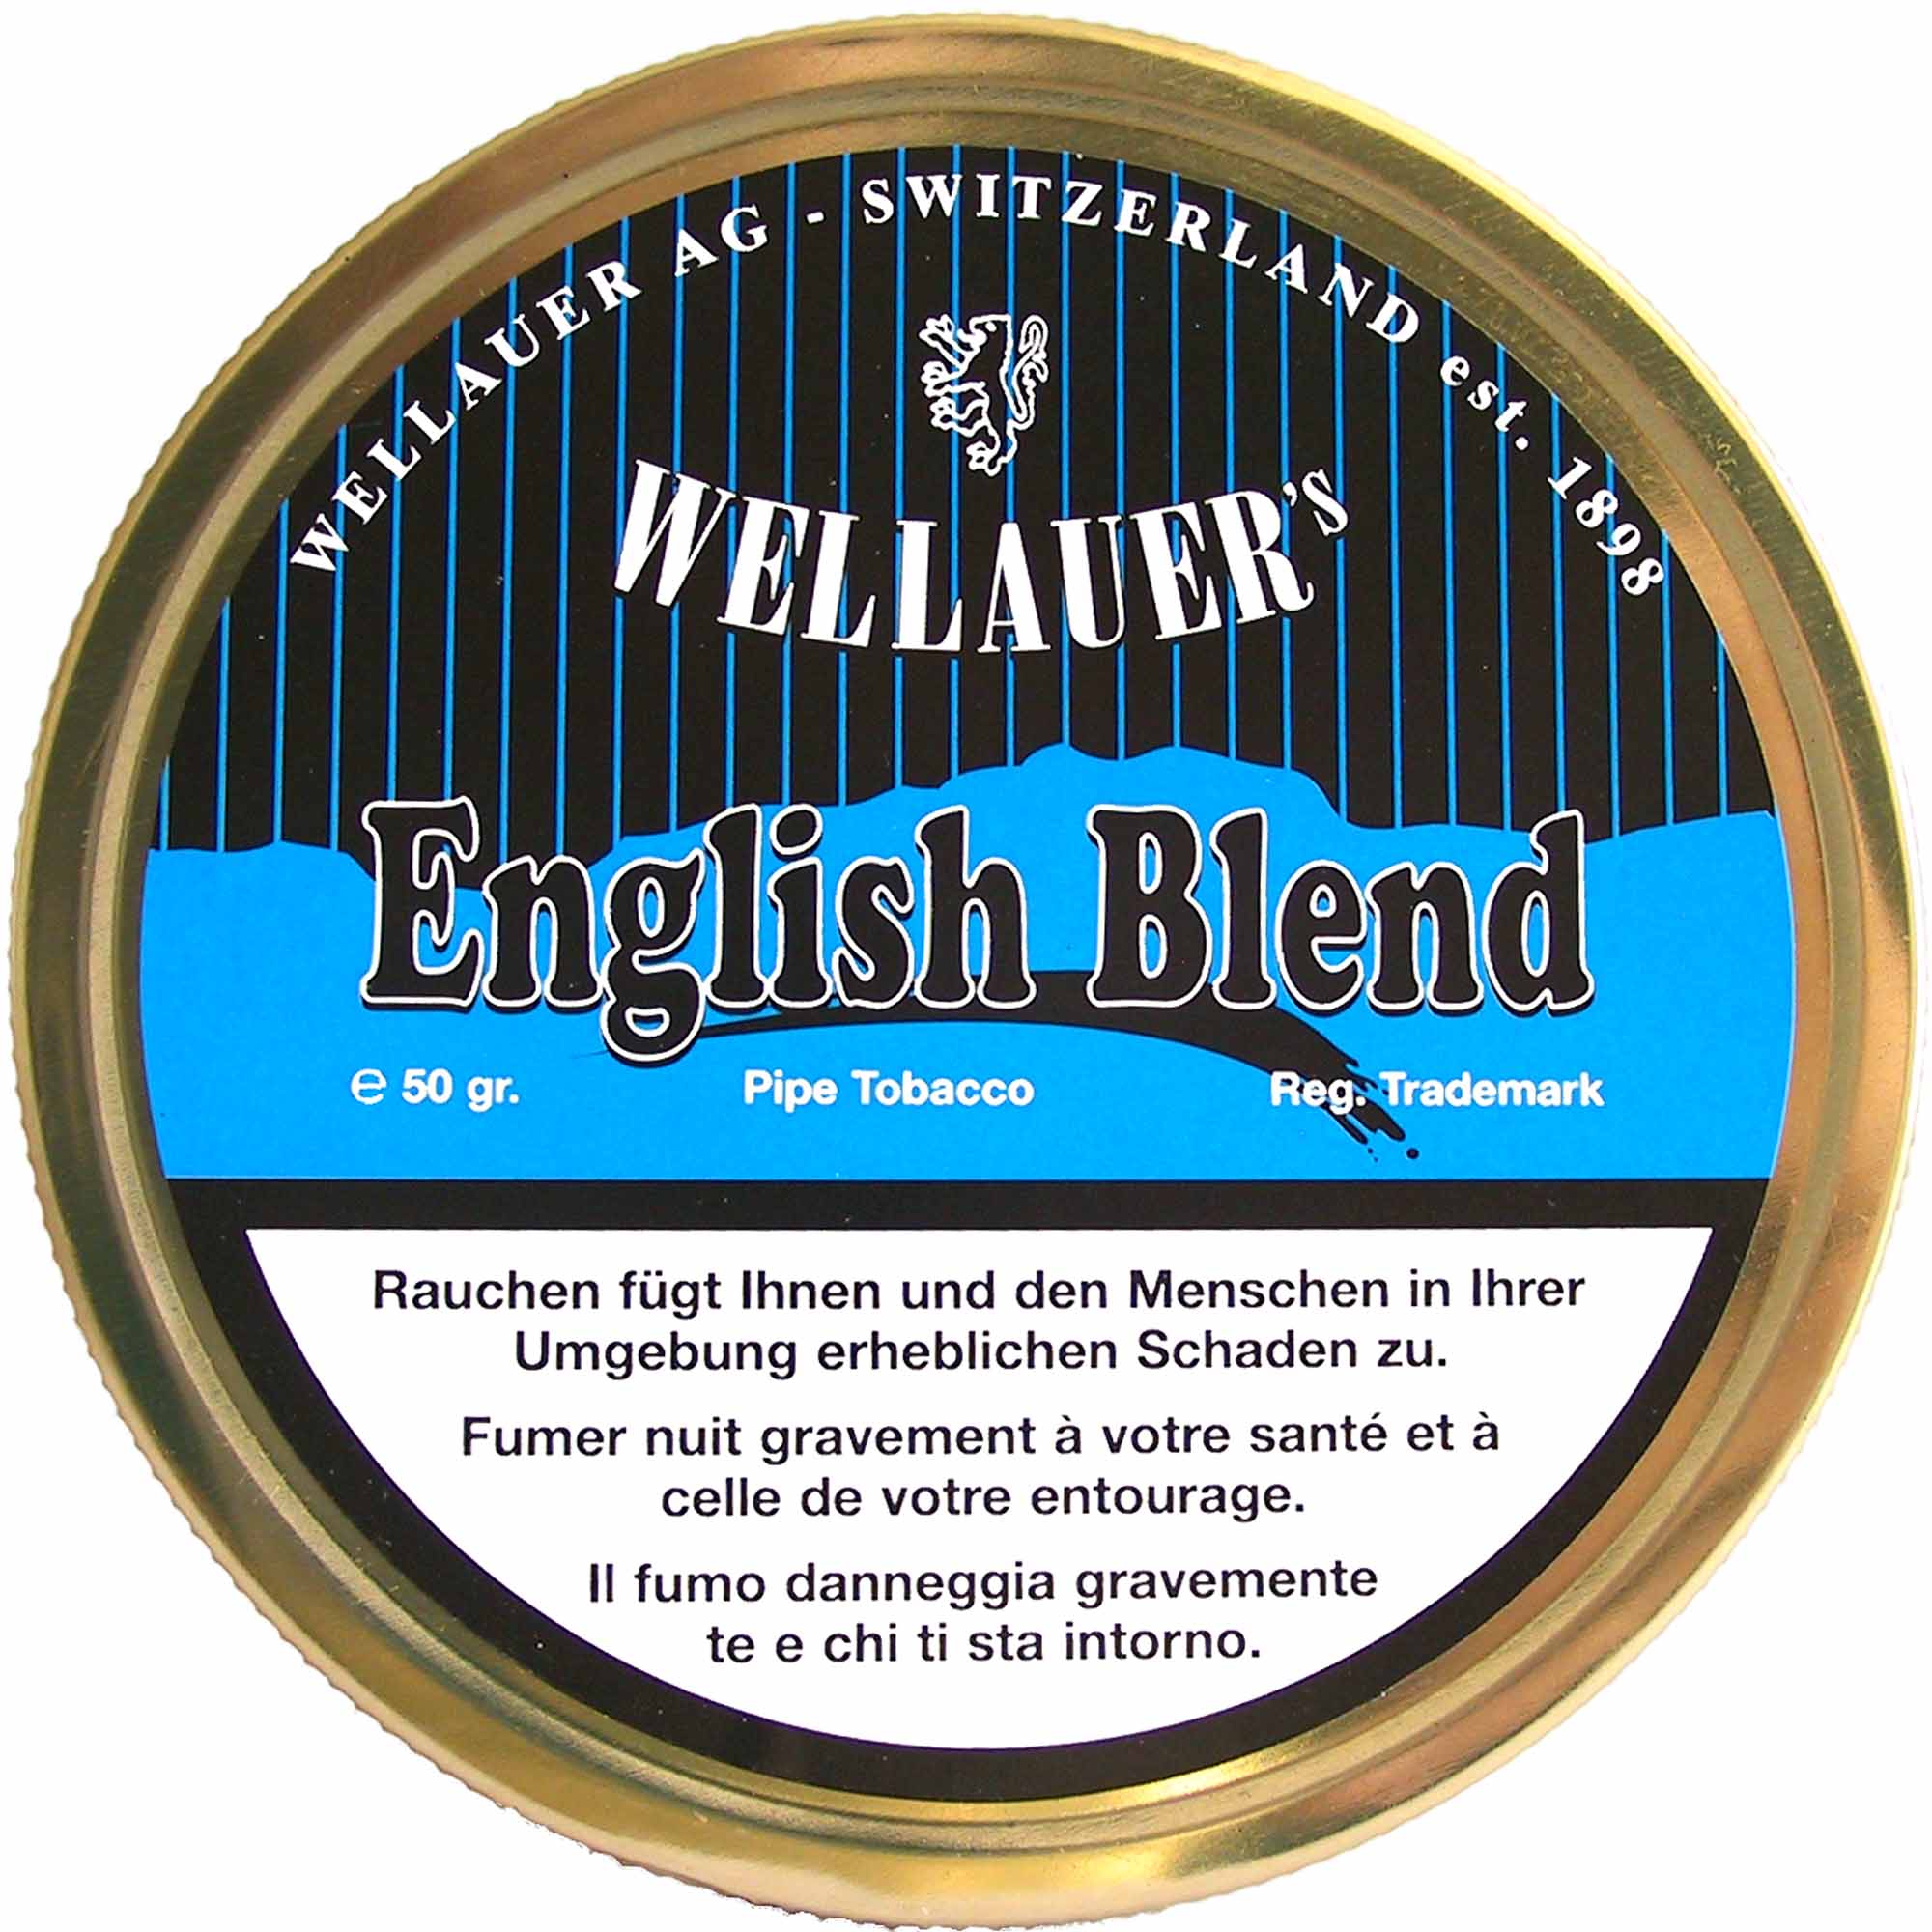 Wellauer's Pfeifentabak English Blend - 50g Tin